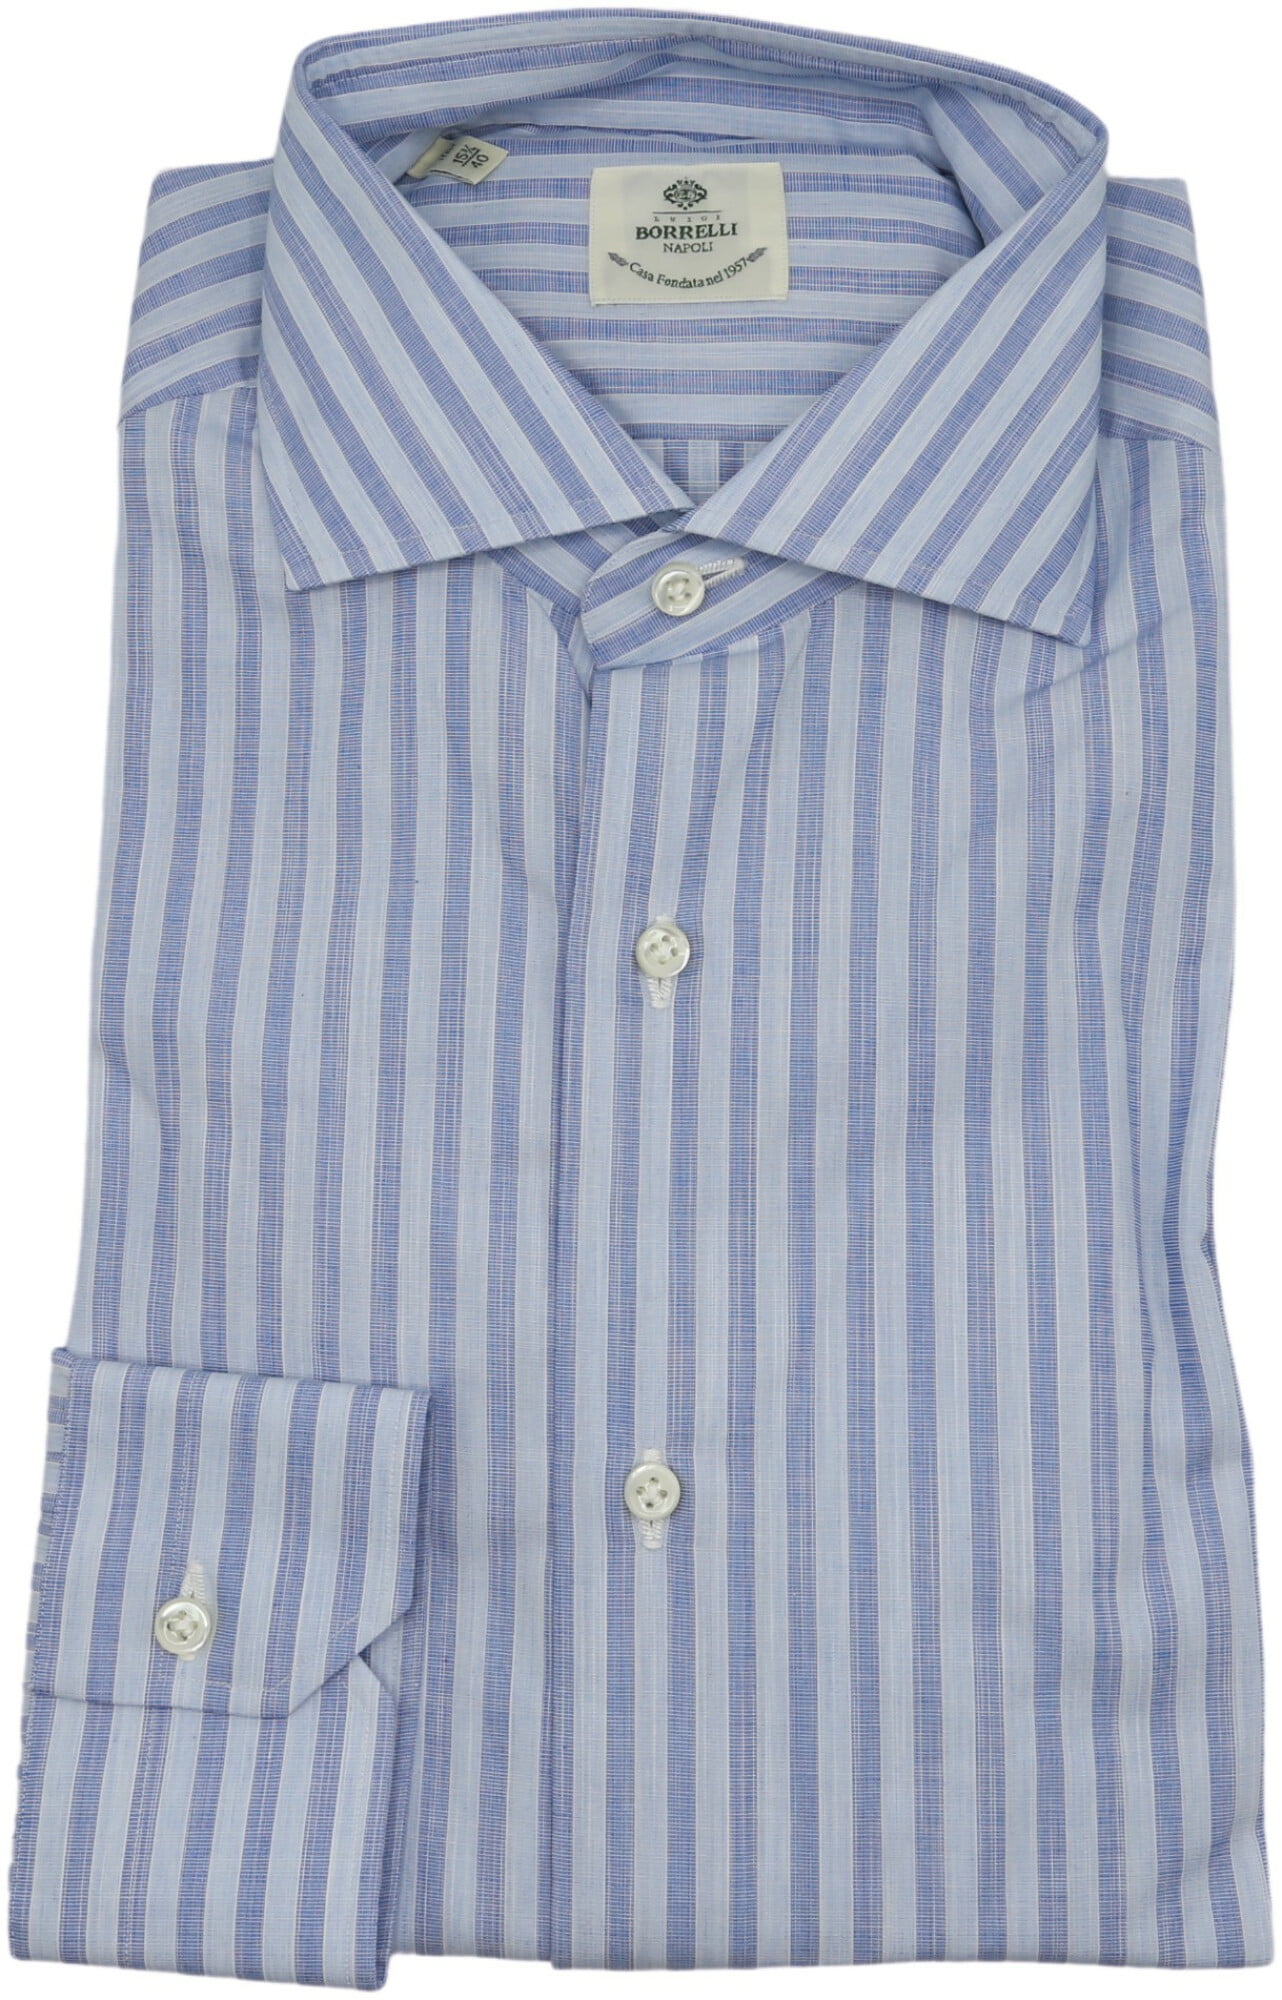 Luigi Borrelli Red Stripes Button Down Spread Collar Cotton Slim Fit Dress Shirt Size Large 17